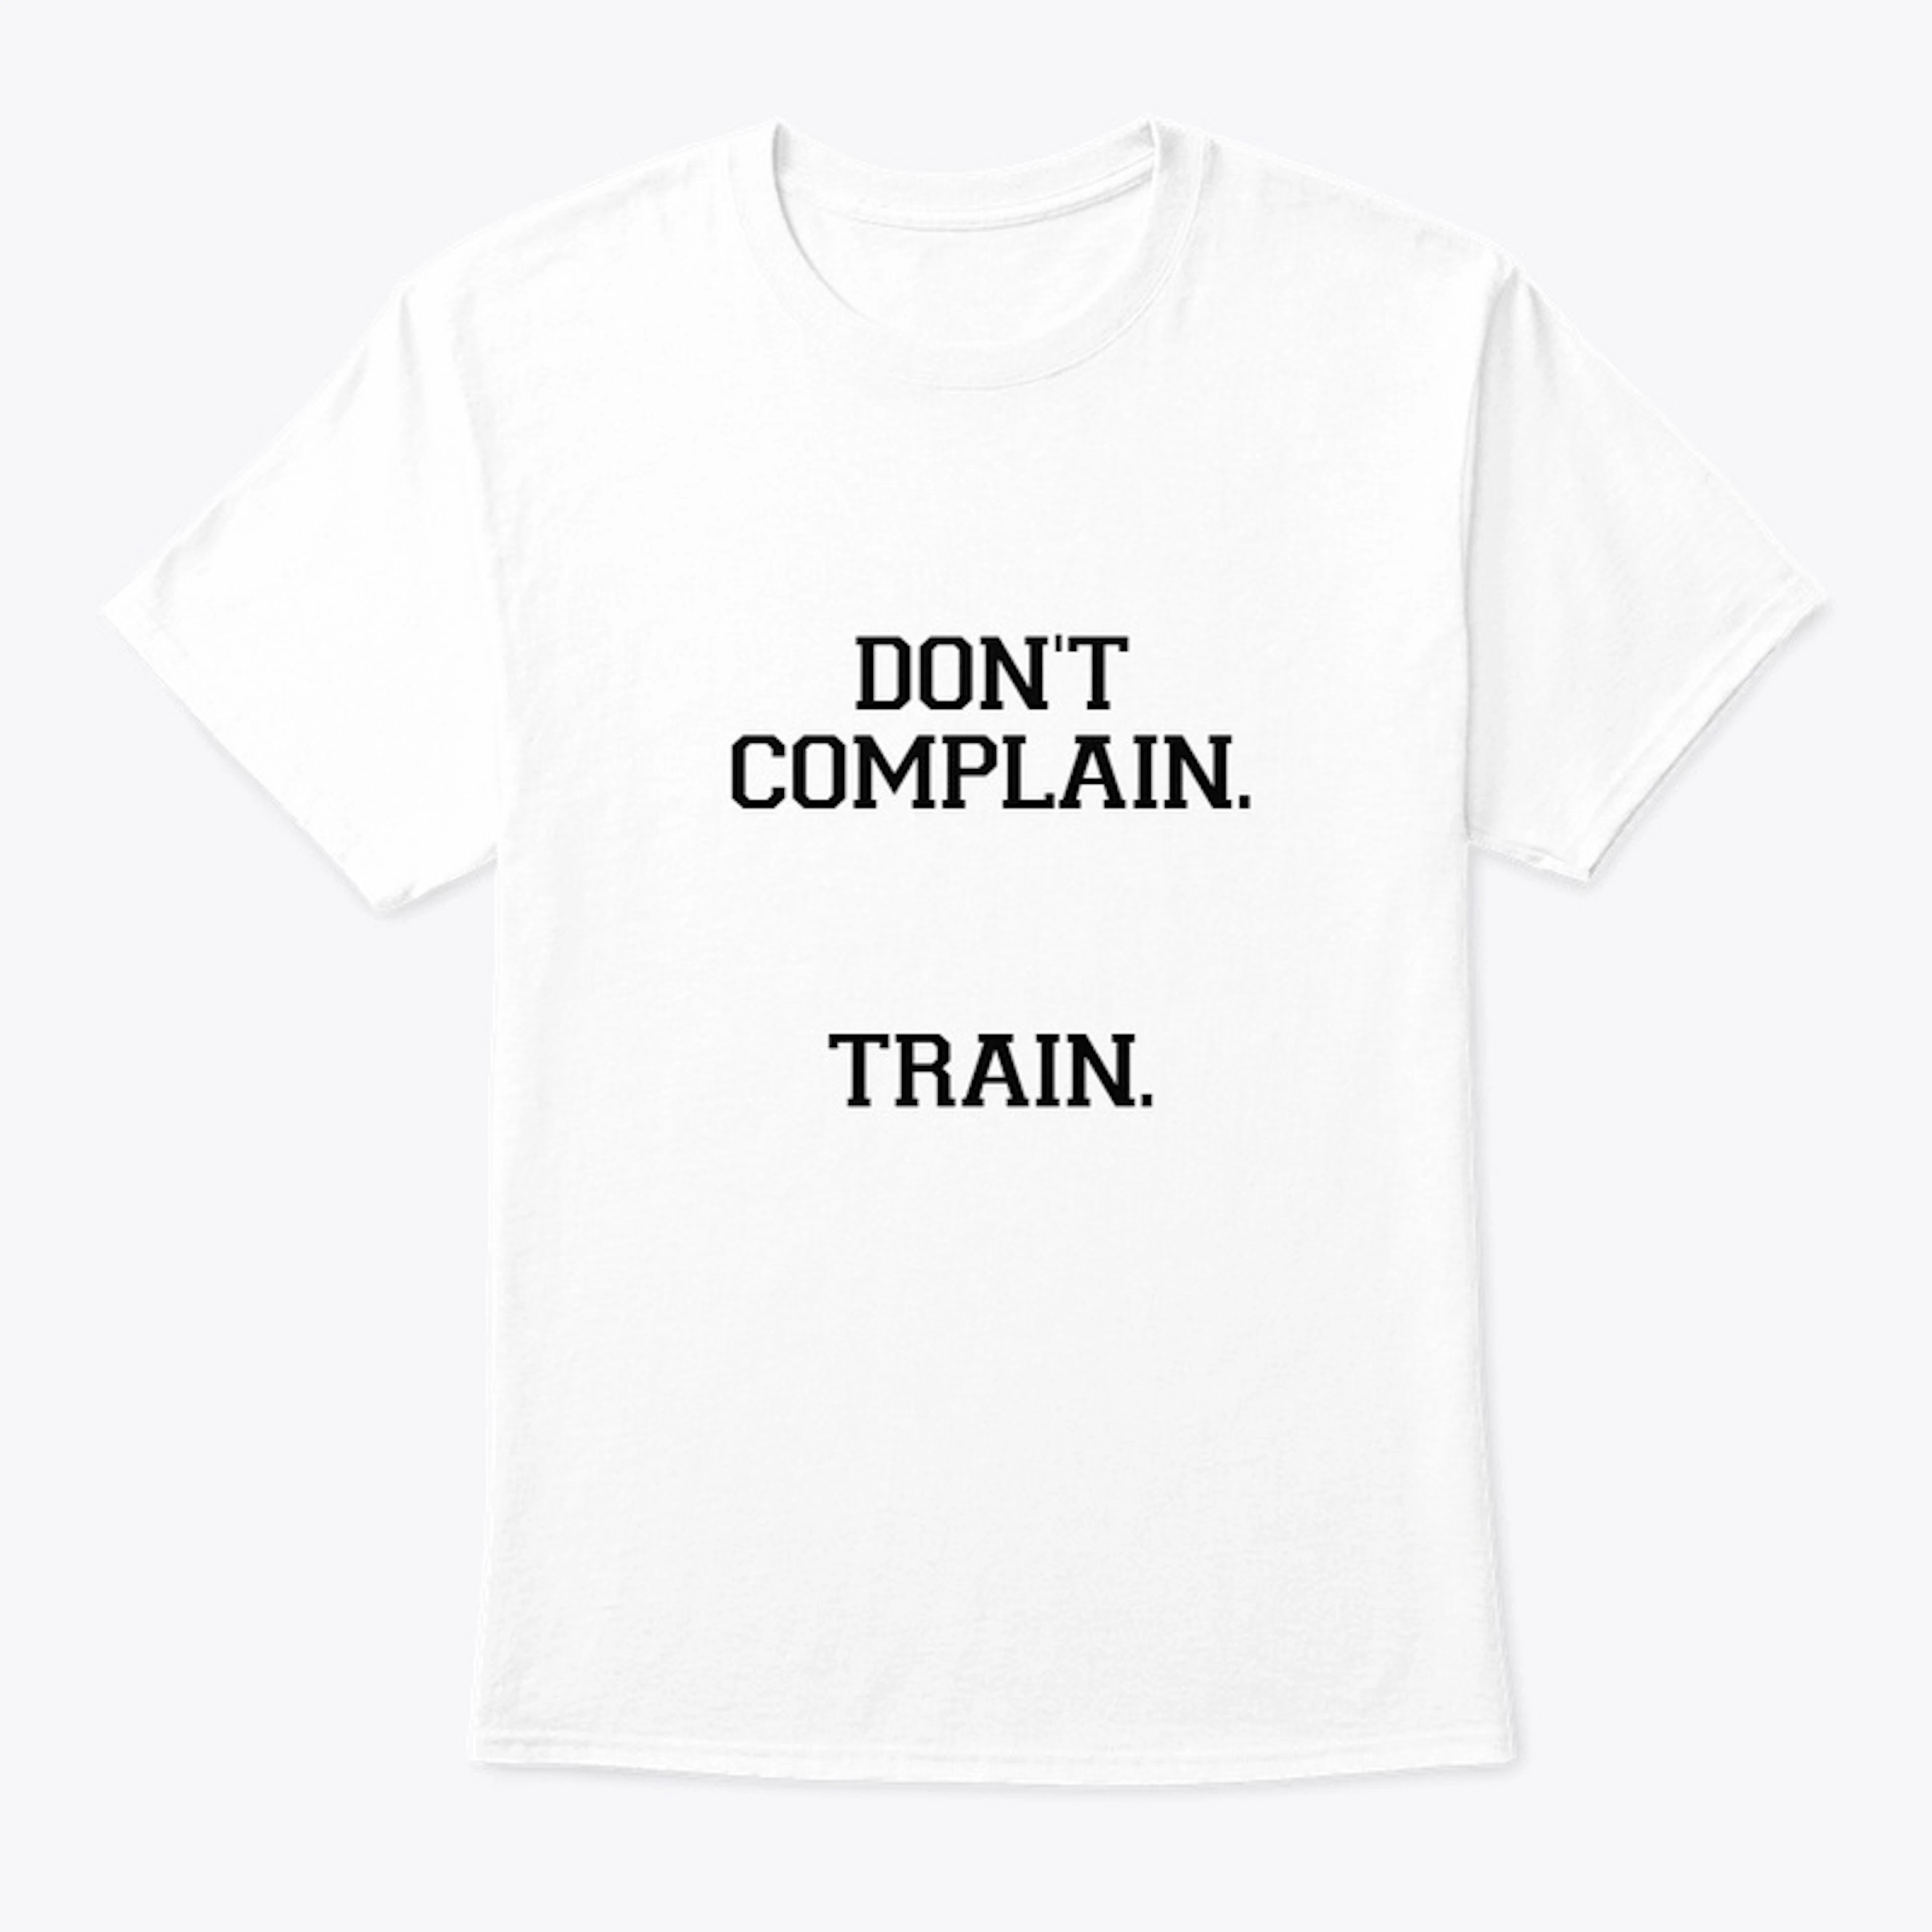 Don't complain. Train